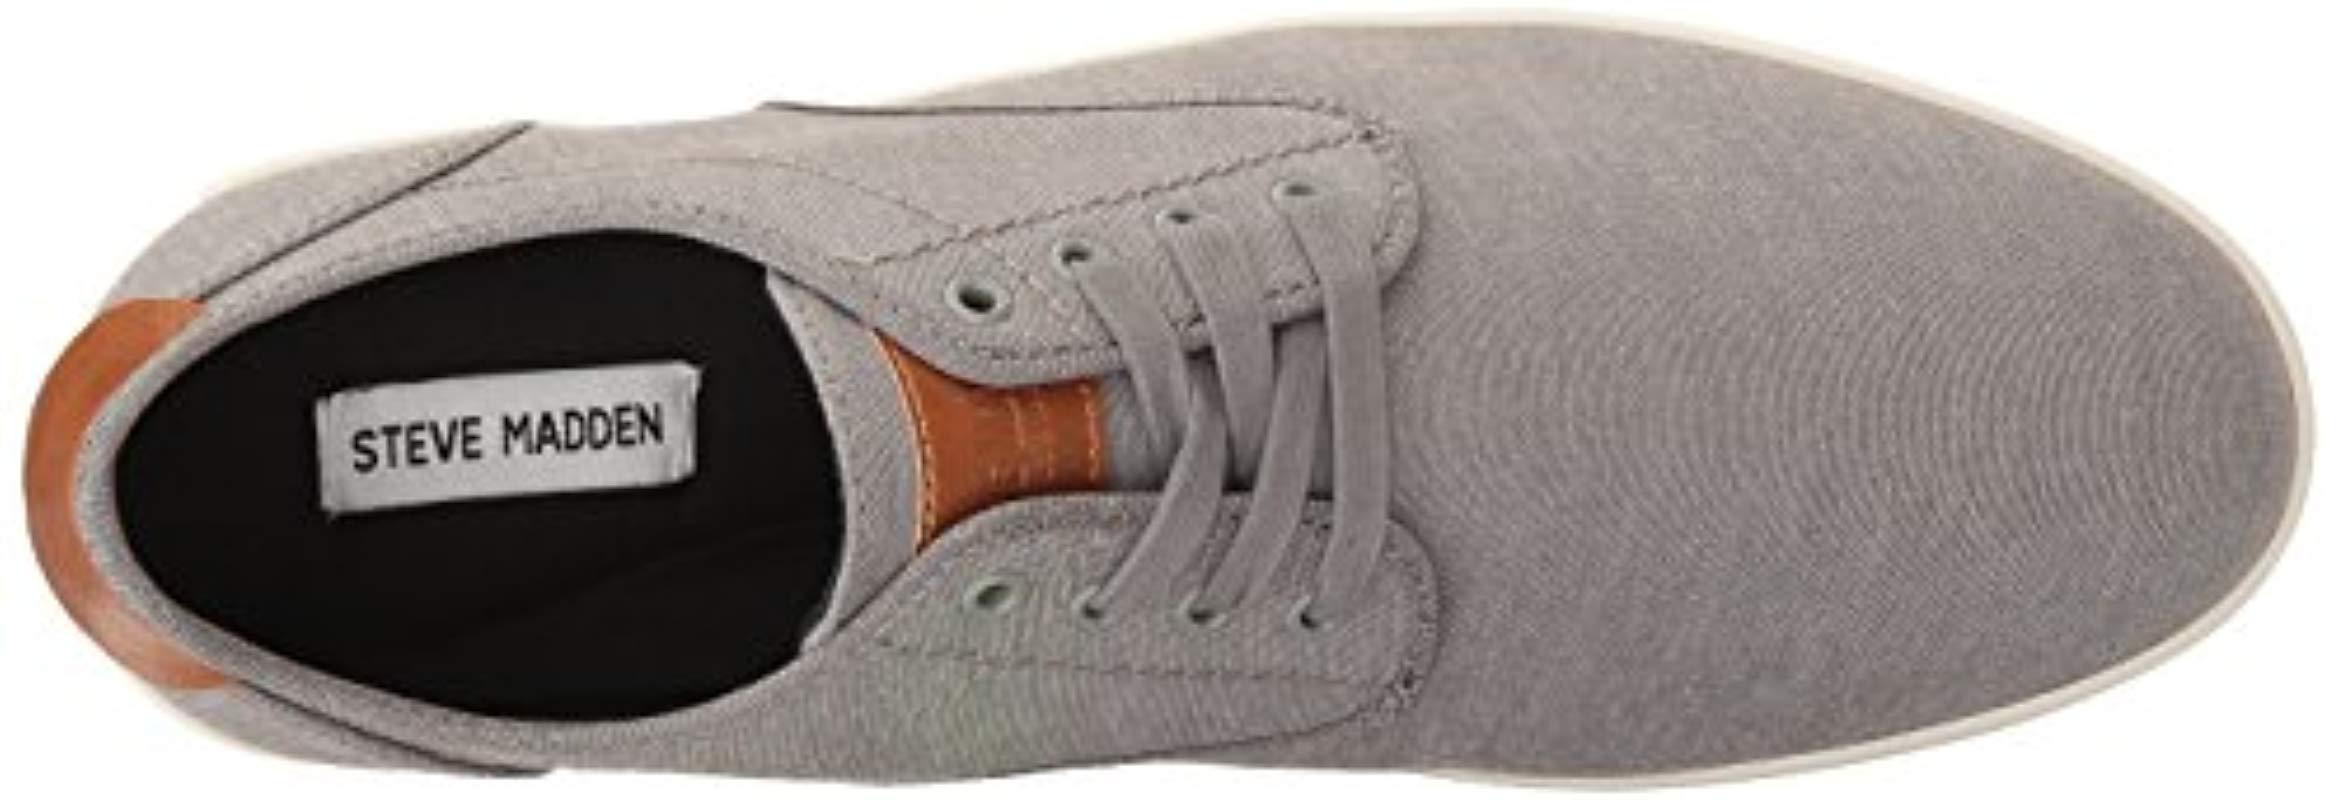 Steve Madden Leather Fenta Fashion Sneaker, Grey Fabric, 12 M Us 